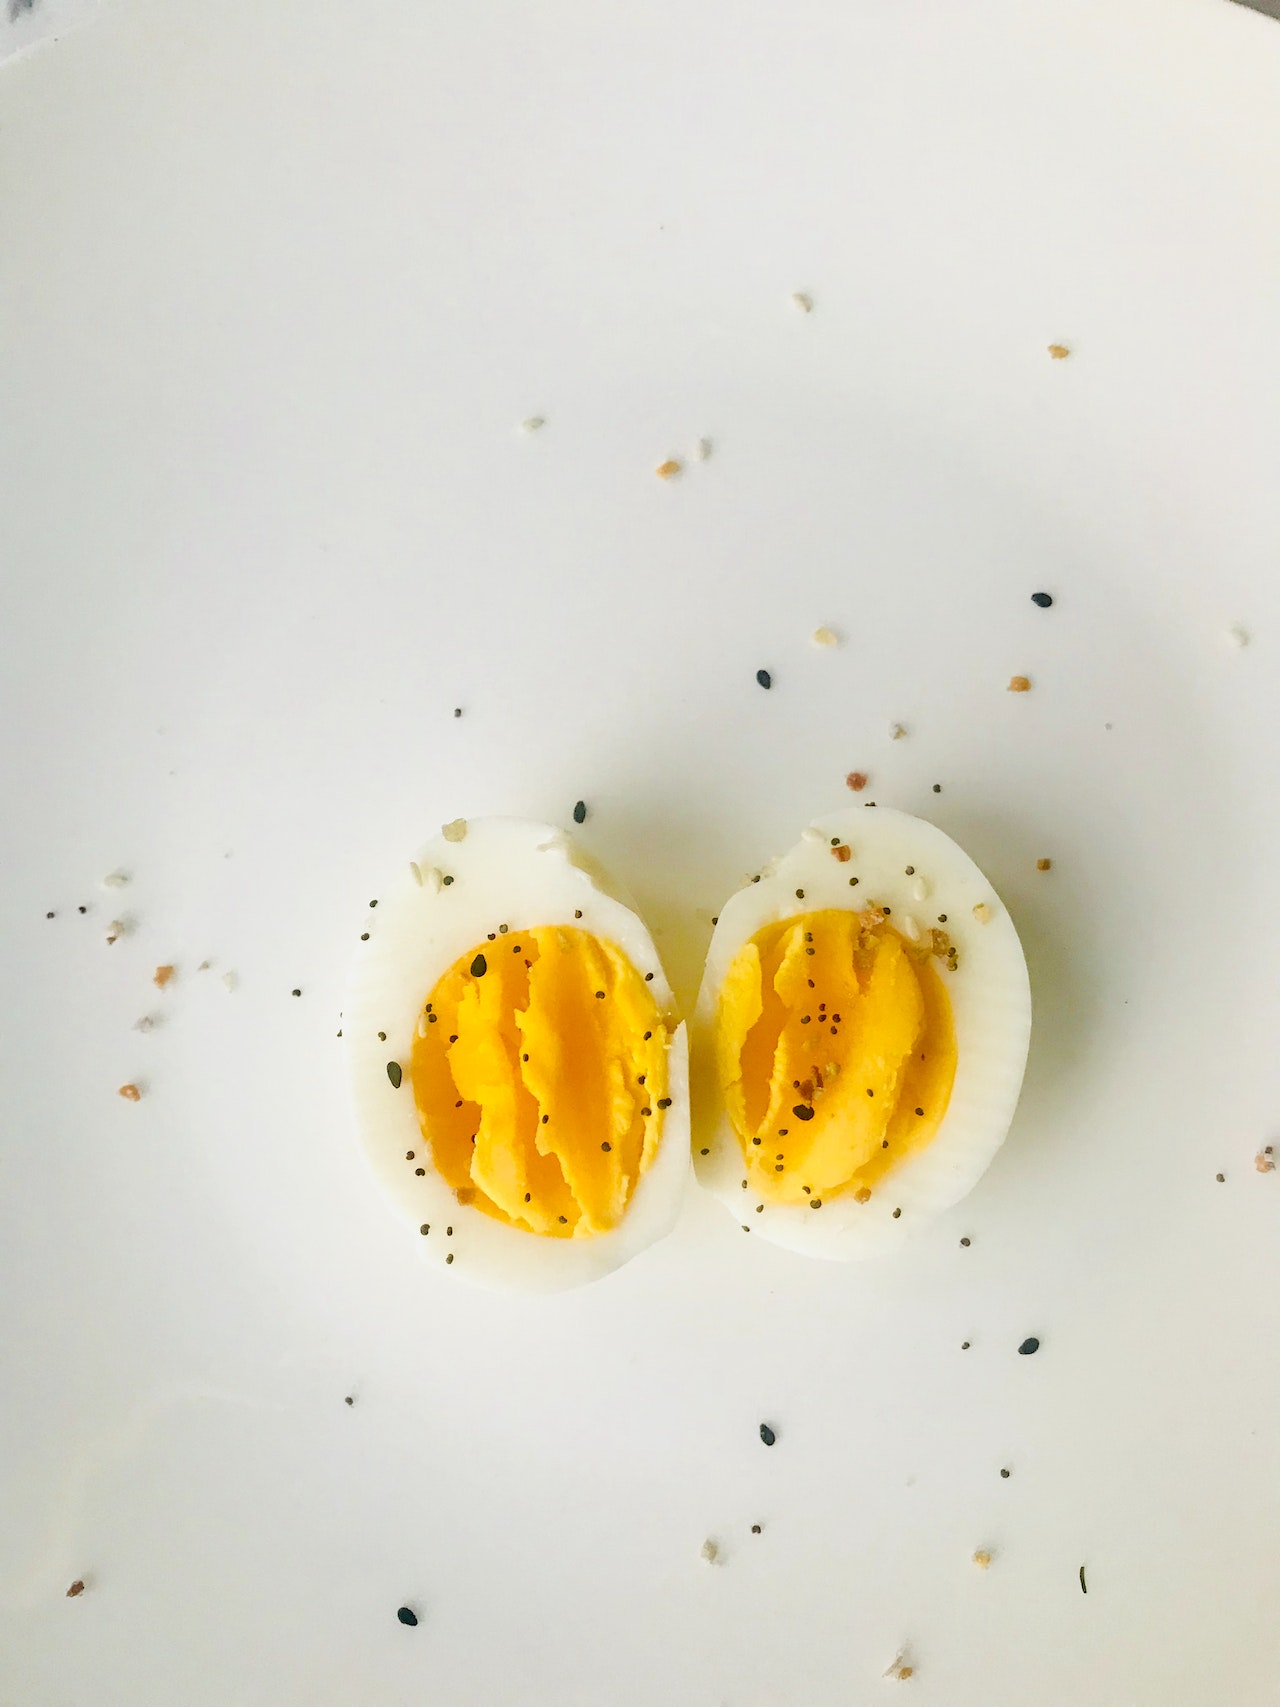 Boiled eggs are healthy snacks for little kids